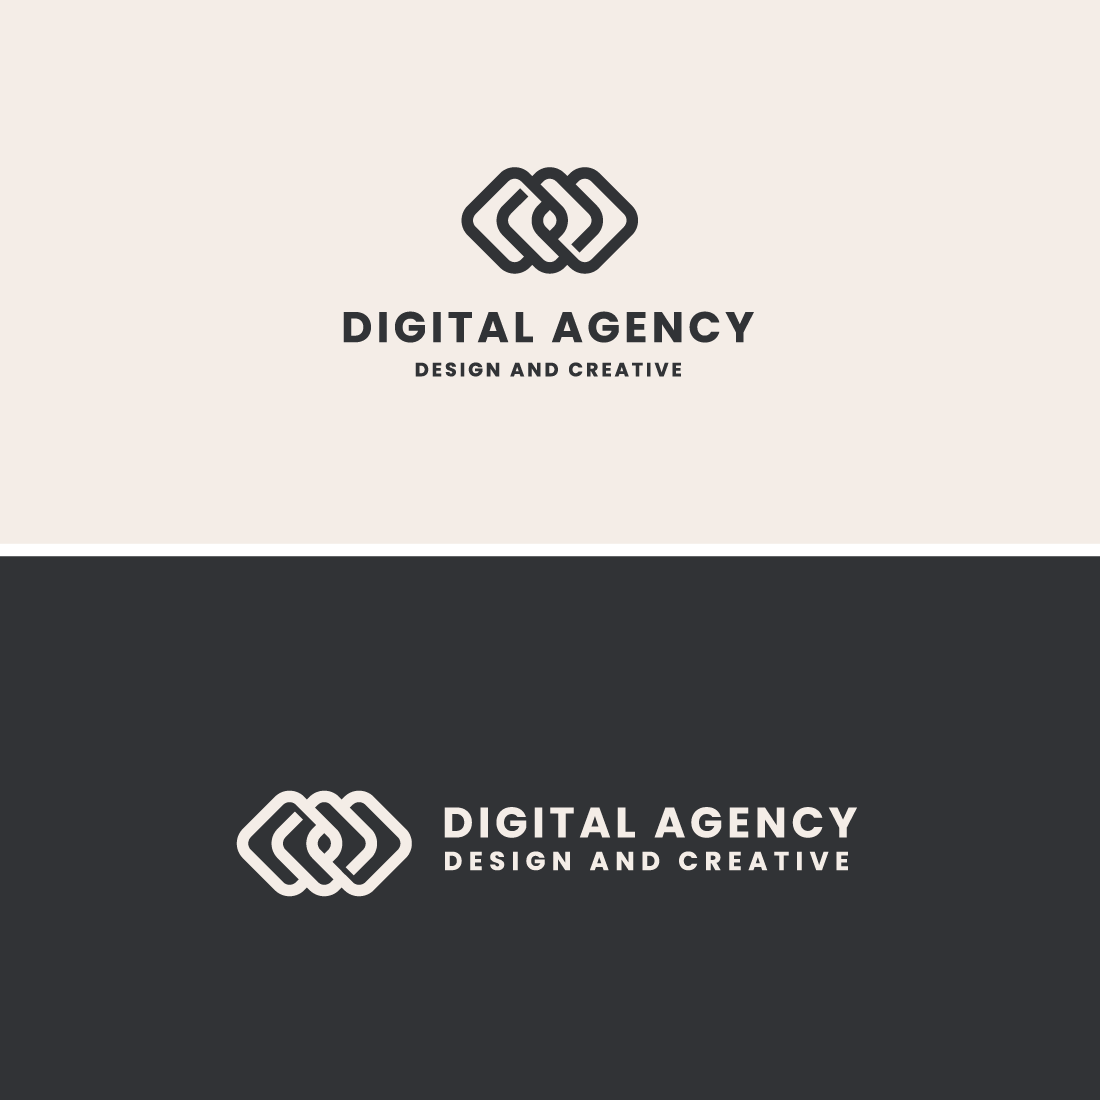 Digital Agency Branding Logo preview image.